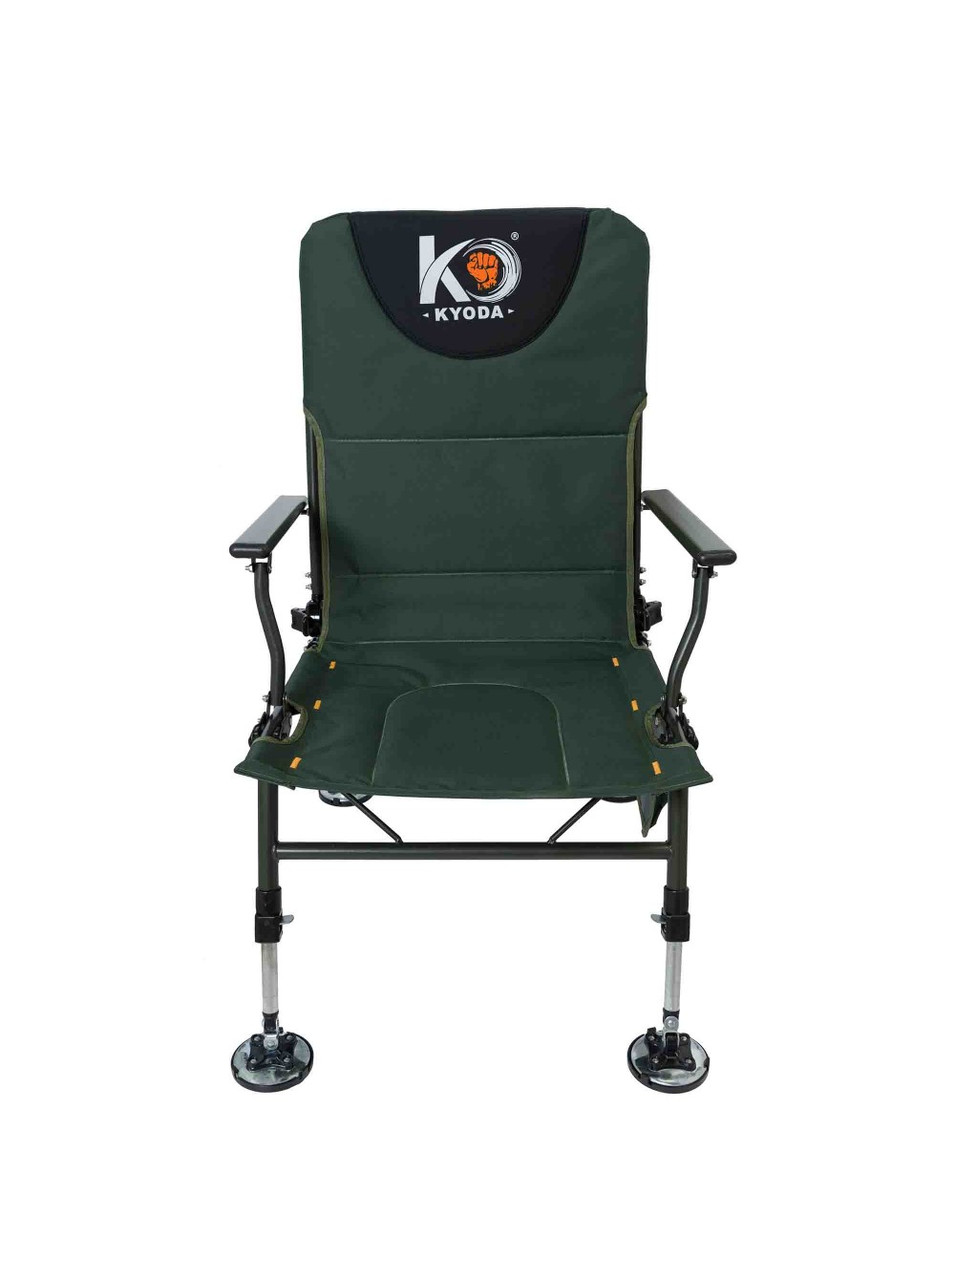 Кресло карповое"Kyoda" SK-500А 65х50х50/100, автоматическое, метал. фурнитура, зеленый ар.2335